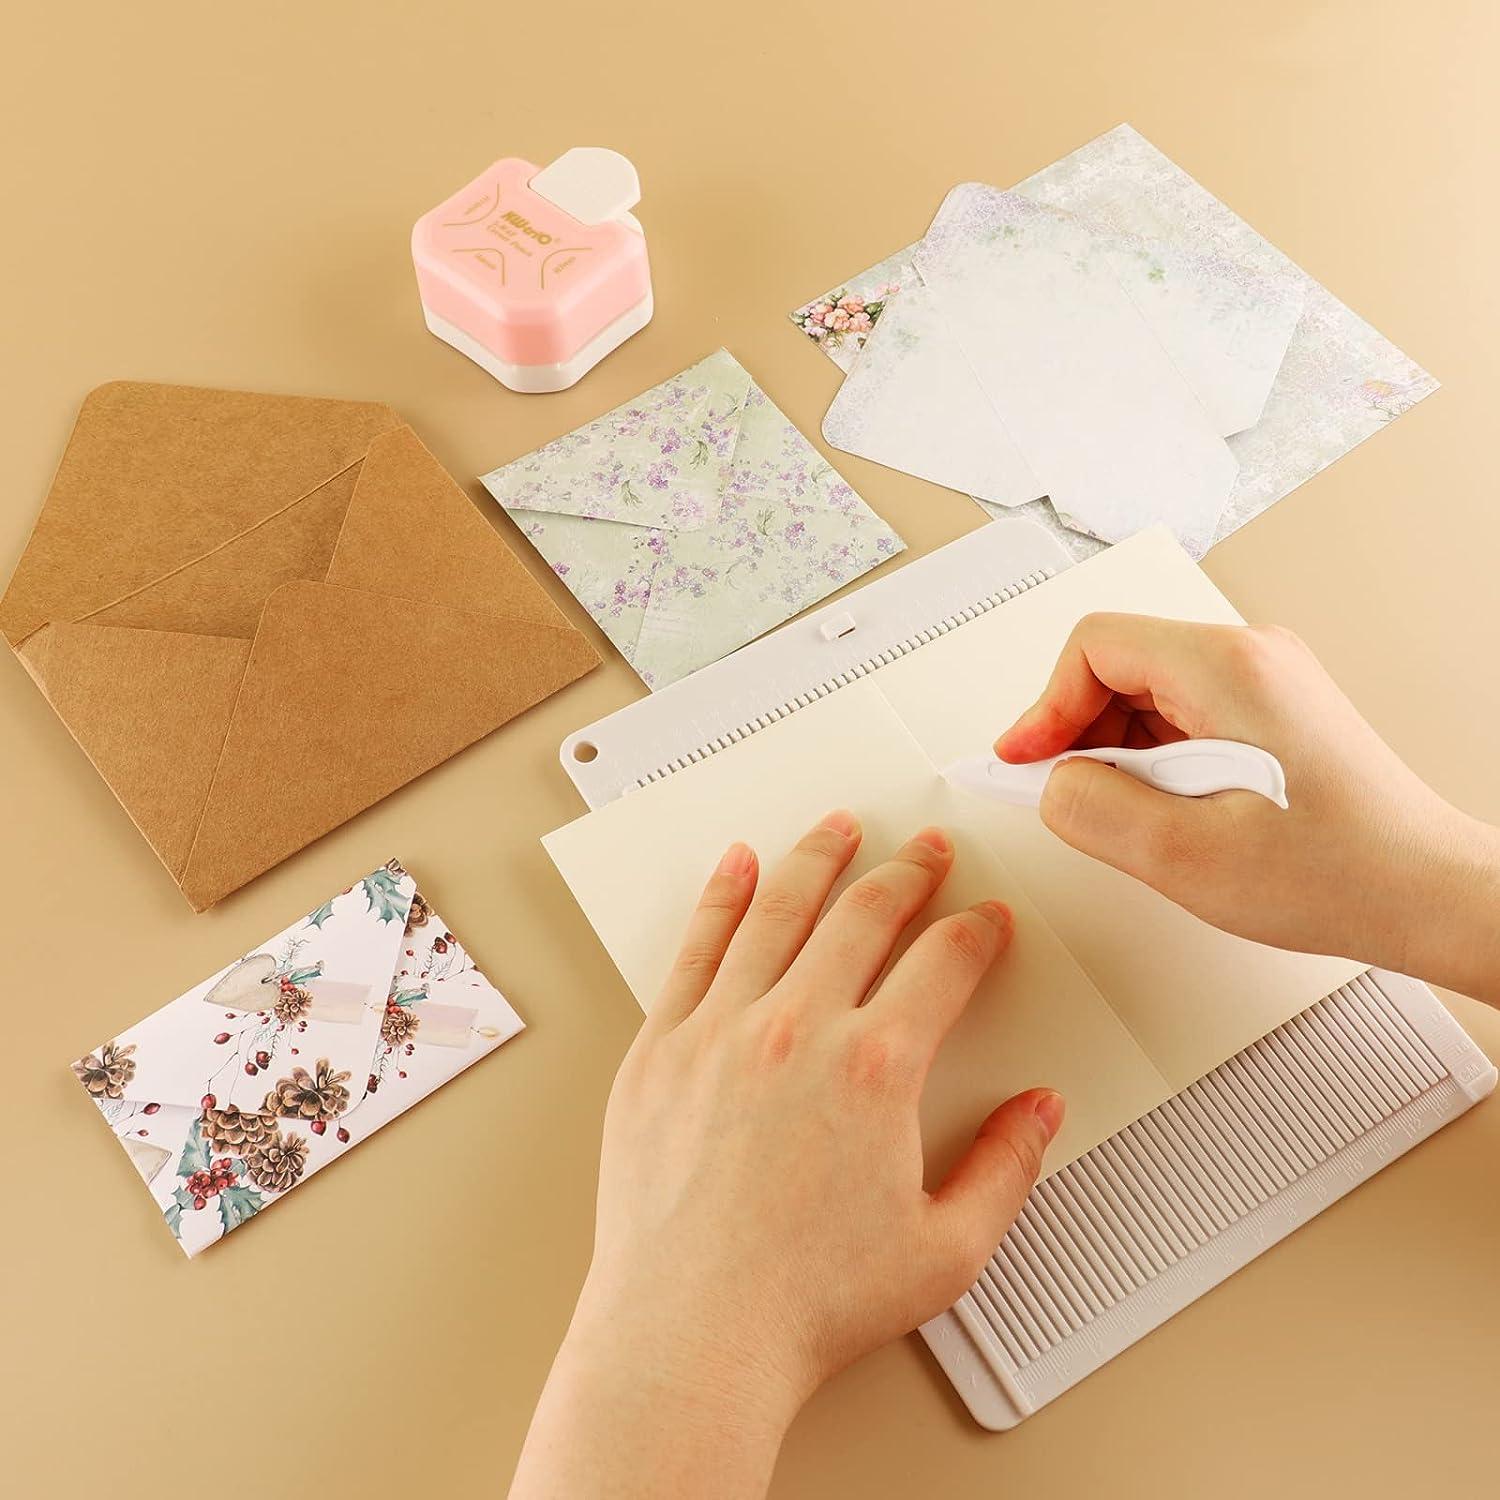 CYFUN DESIGN Mini Score Board Multi-Purpose Scoring Board Envelope Maker  with Bone Folder and Guide for Card Making and Paper Crafts Arts Projects